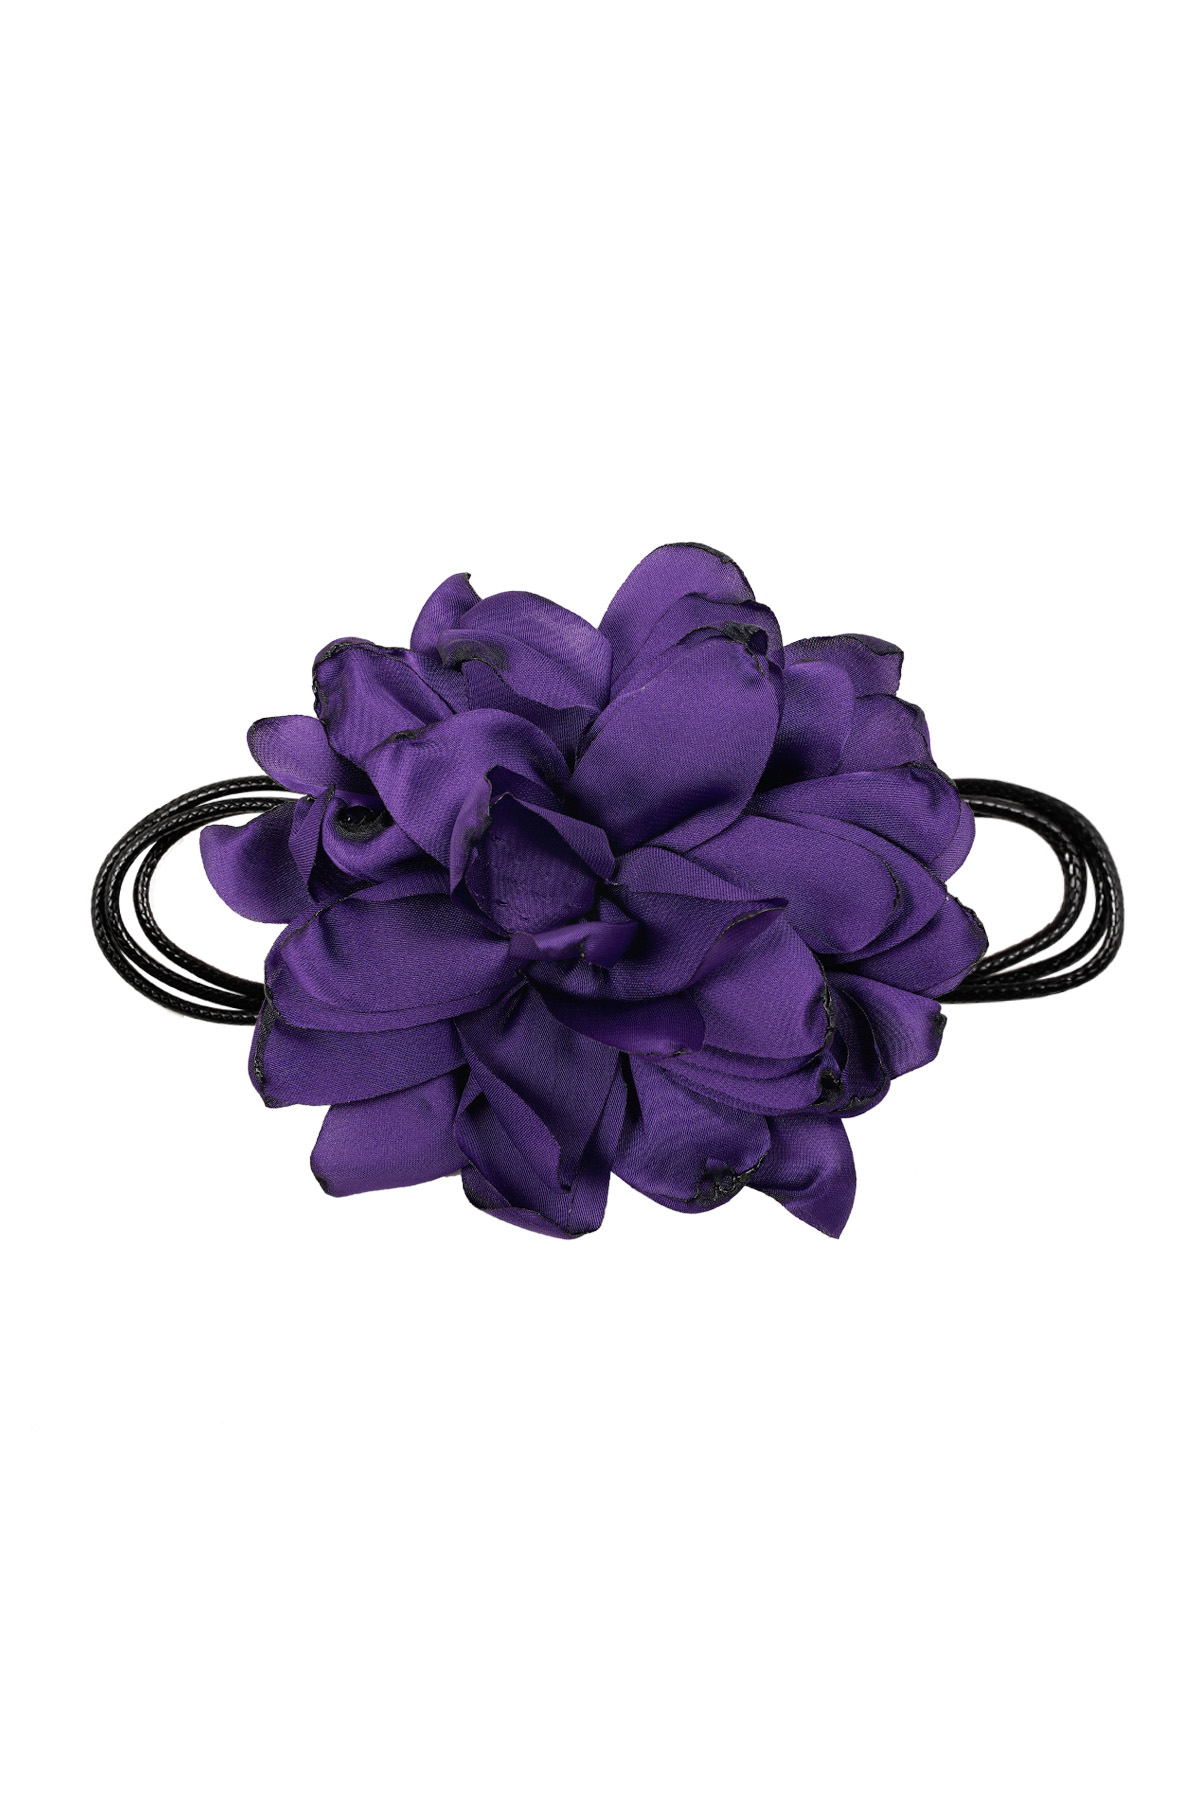 Collier grande fleur - violet h5 